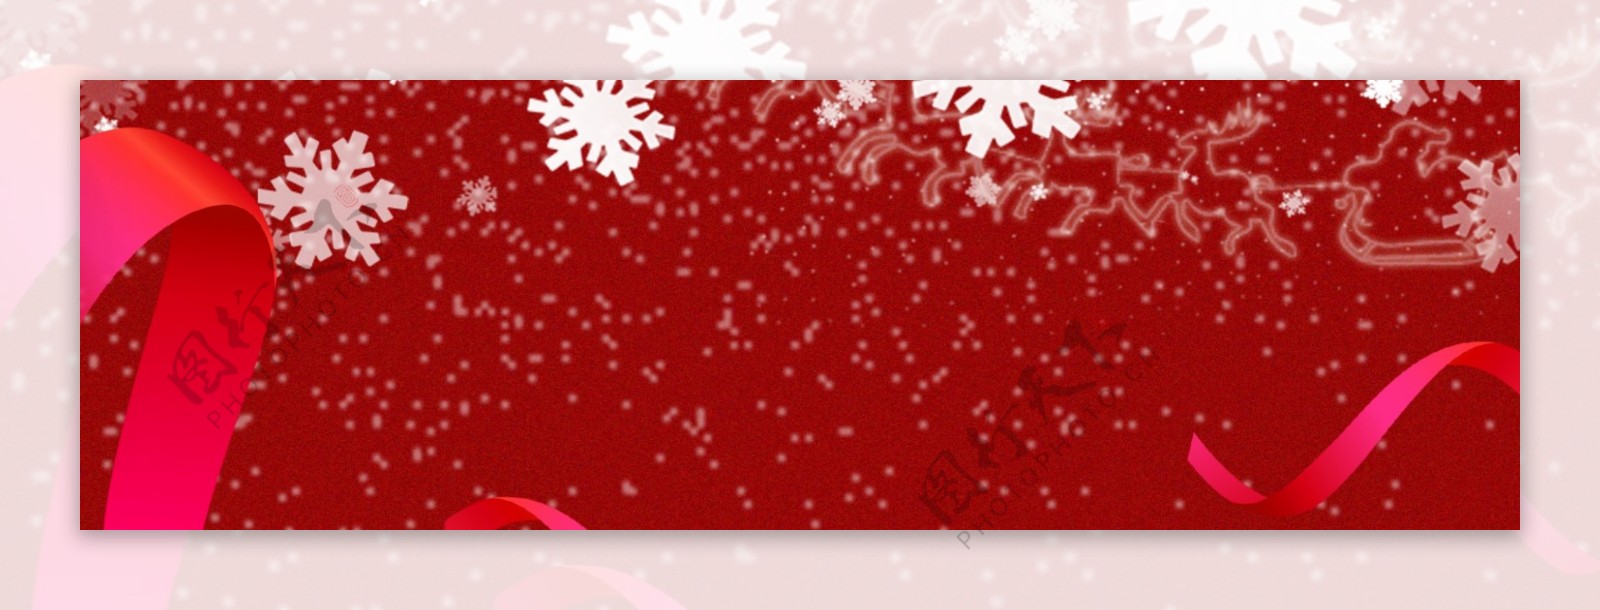 喜庆雪地冬天色圣诞节banner背景